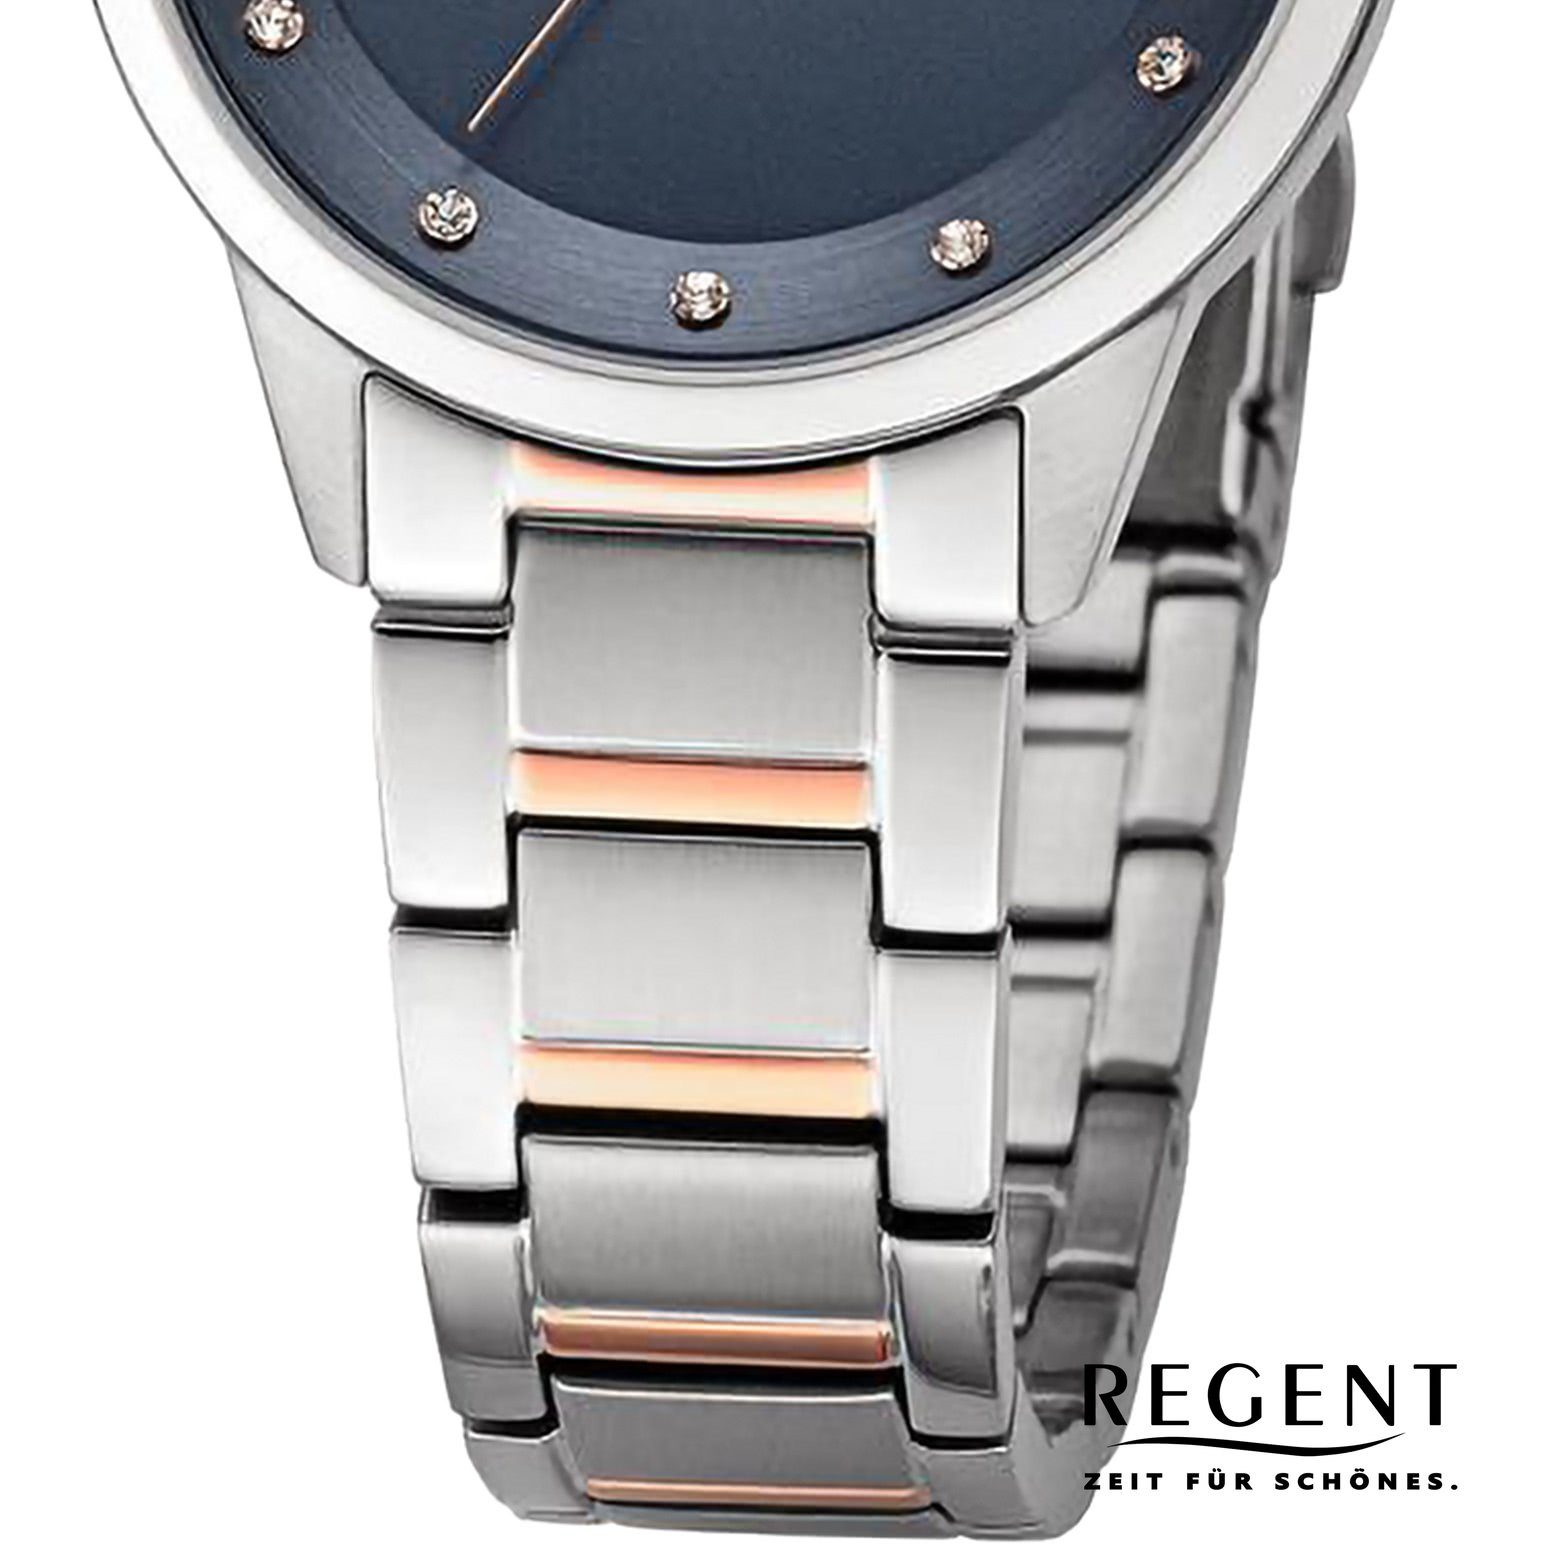 Quarzuhr (ca. rund, Analog, Armbanduhr Damen Metallarmband Armbanduhr groß 33mm), Regent extra Regent Damen